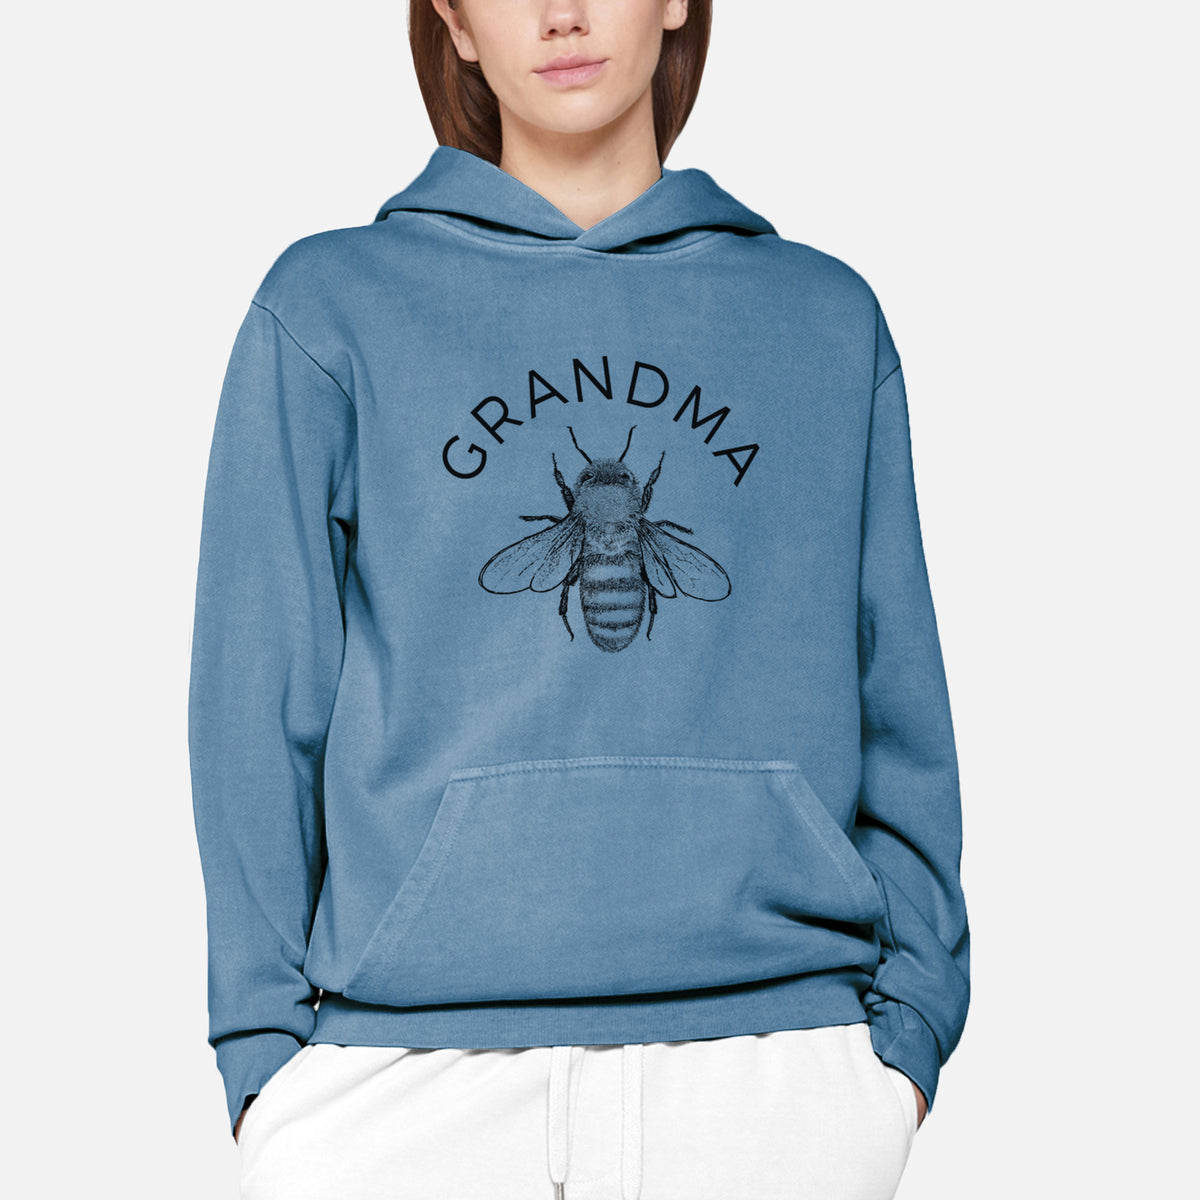 Grandma Bee  - Urban Heavyweight Hoodie